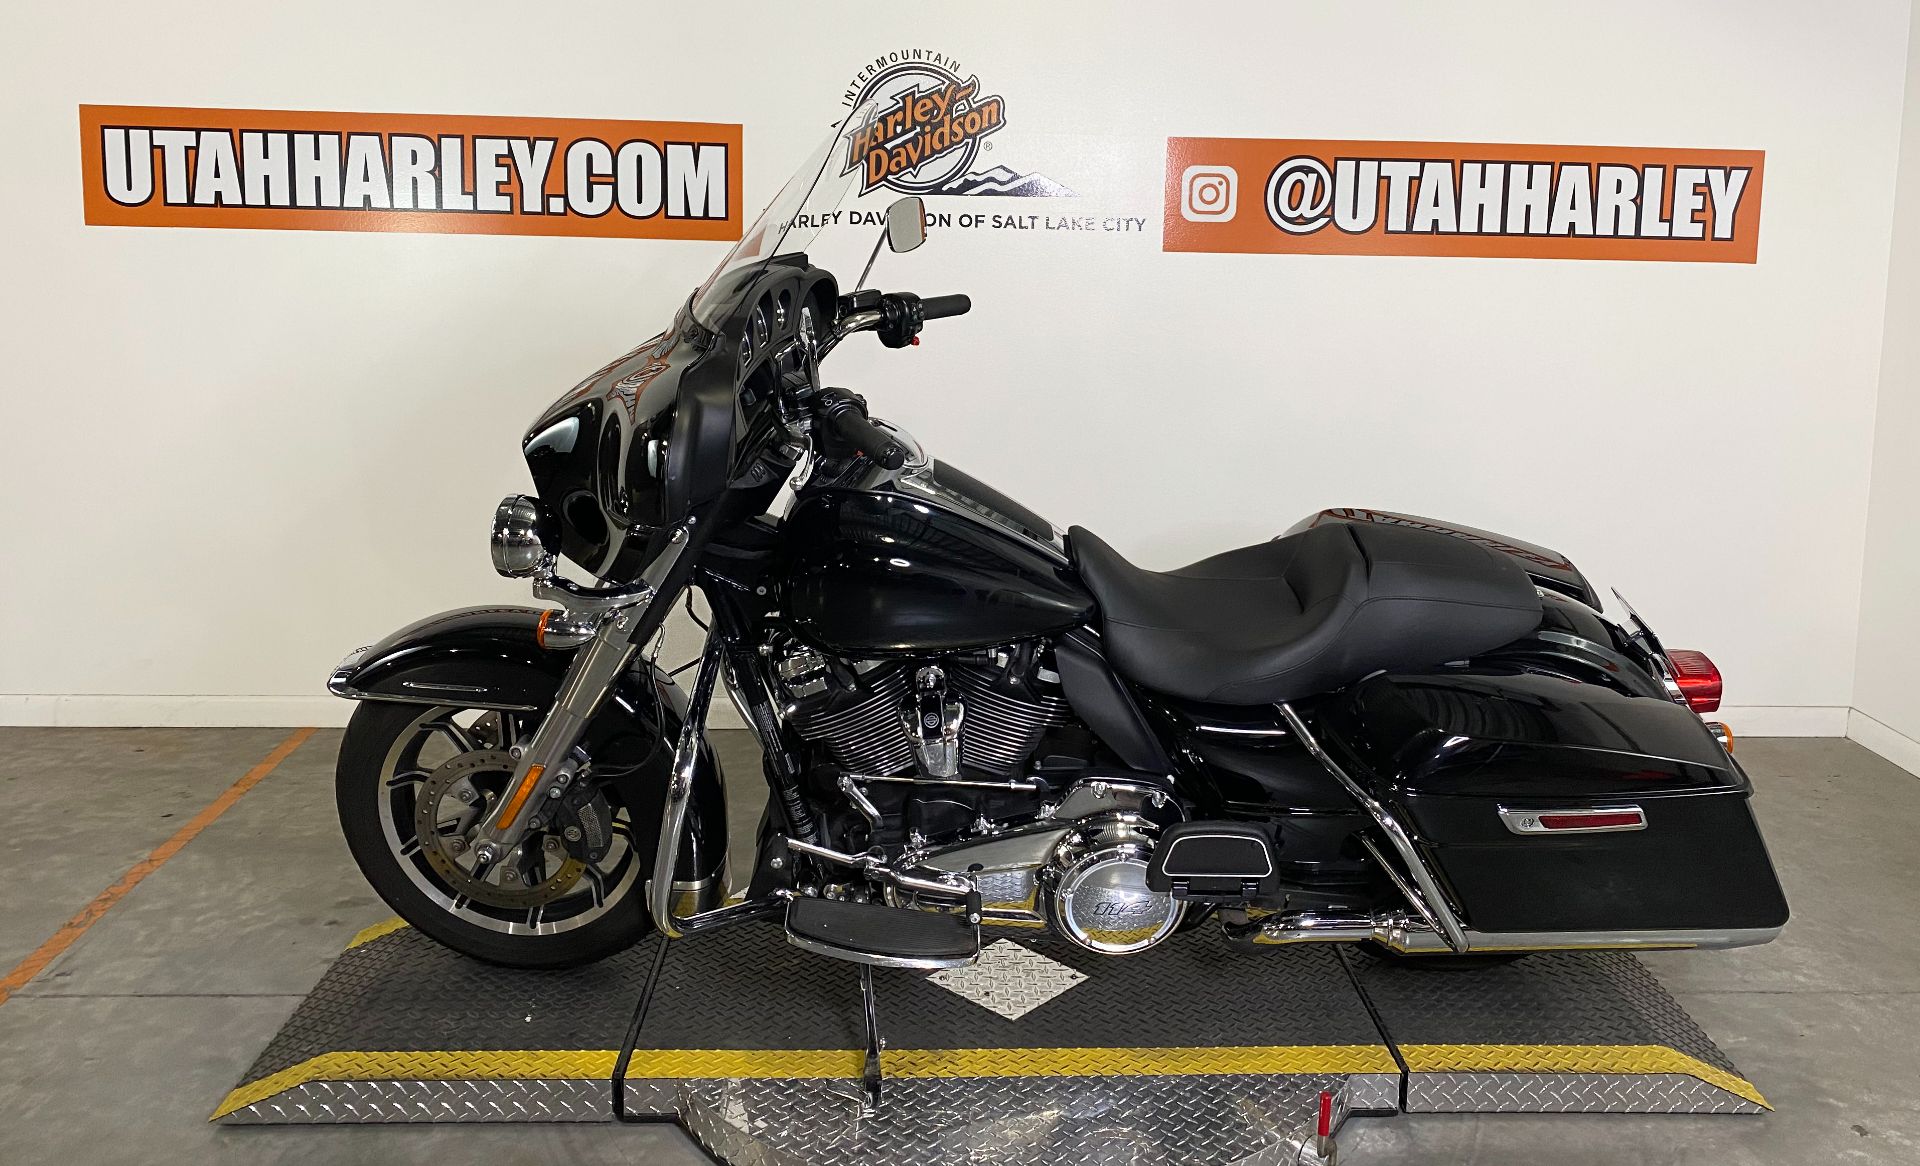 2020 Harley-Davidson Electra Glide Police - 114 motor in Salt Lake City, Utah - Photo 5